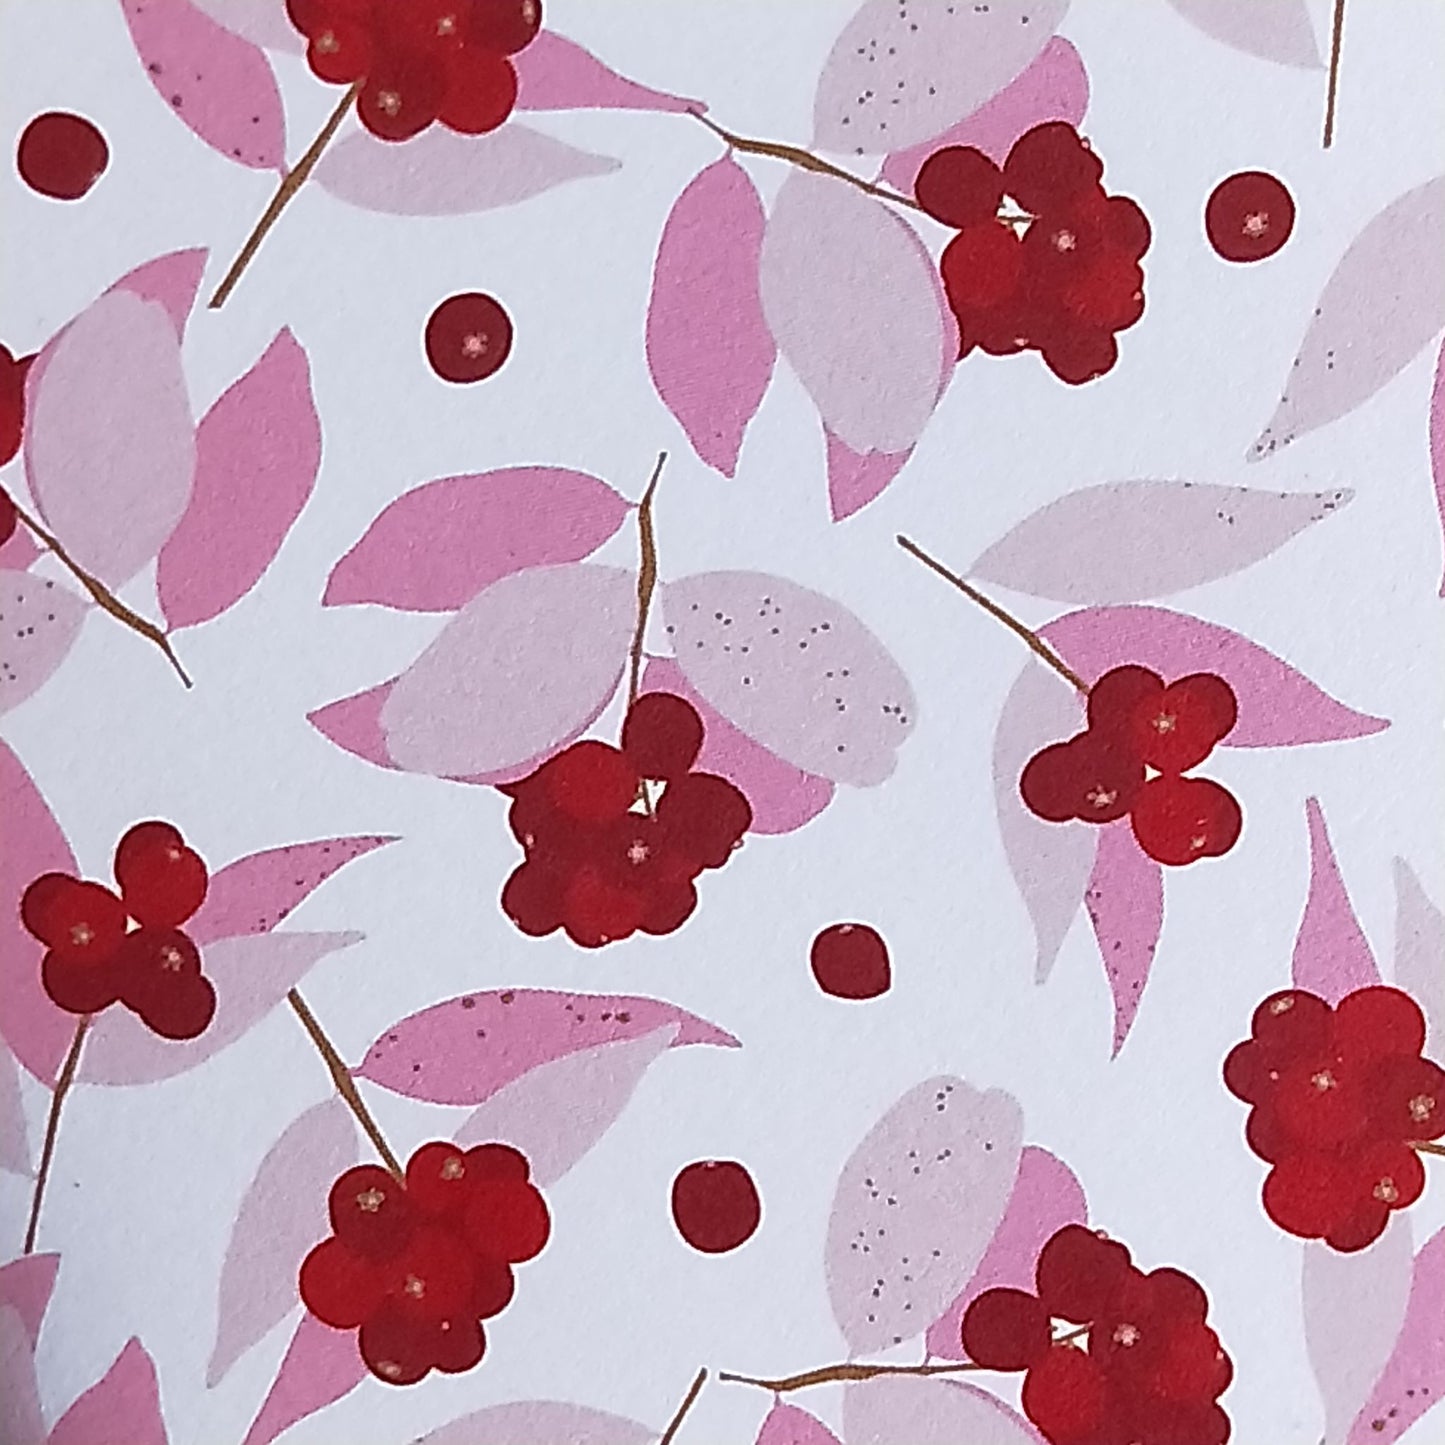 Wilddori 40 sheet Blank Insert - Red Berries